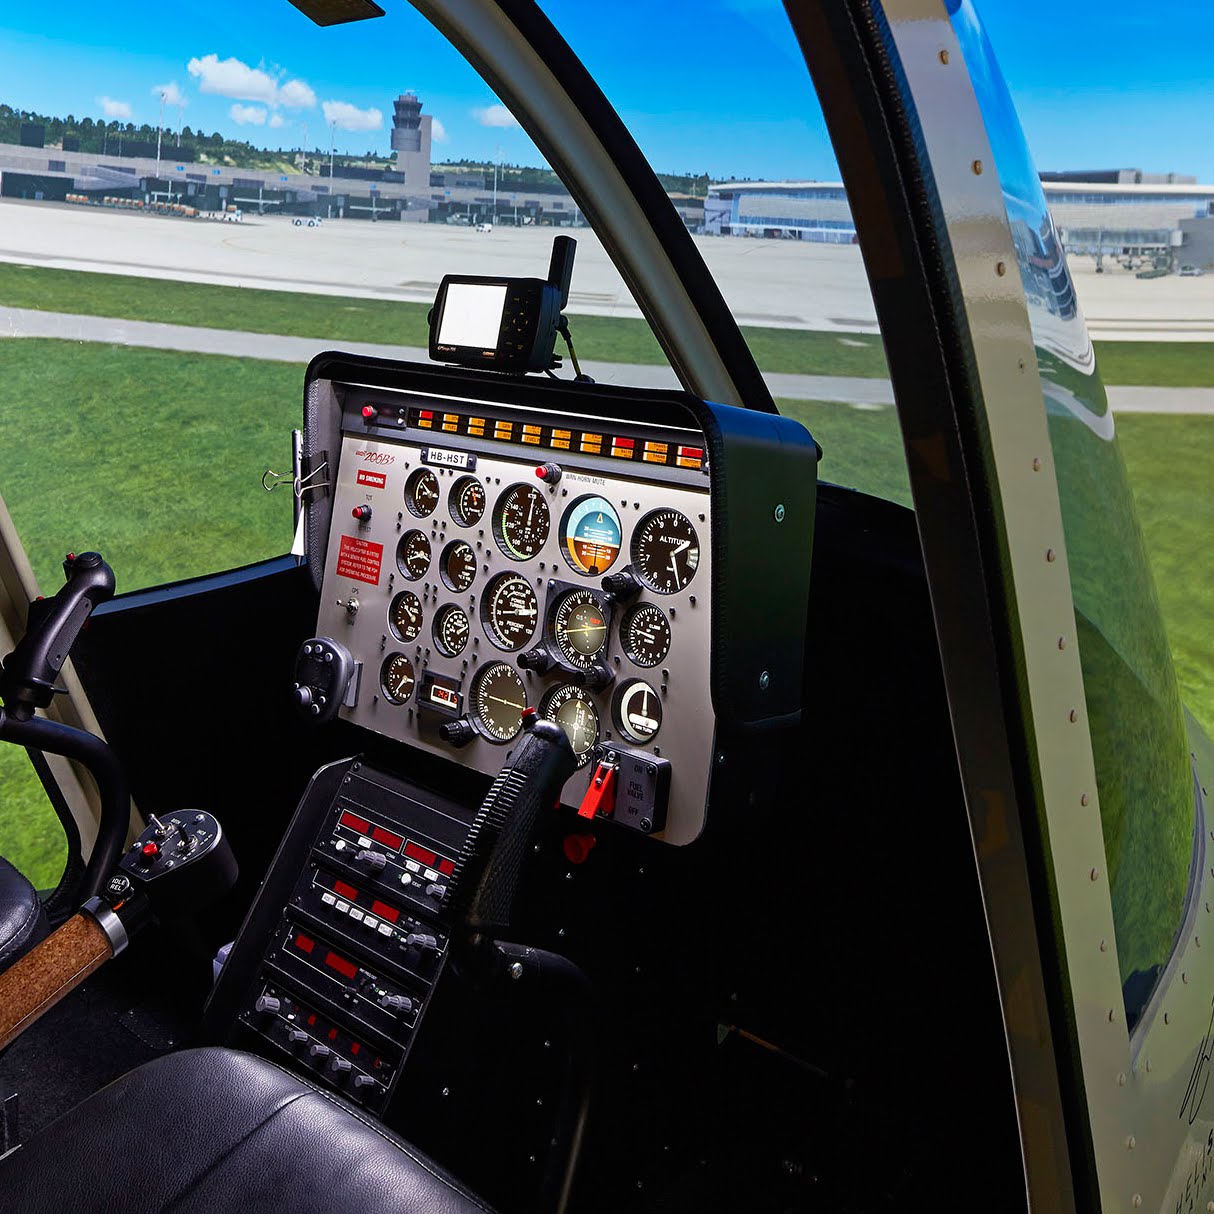 Bell 206 Simulator in Switzerland